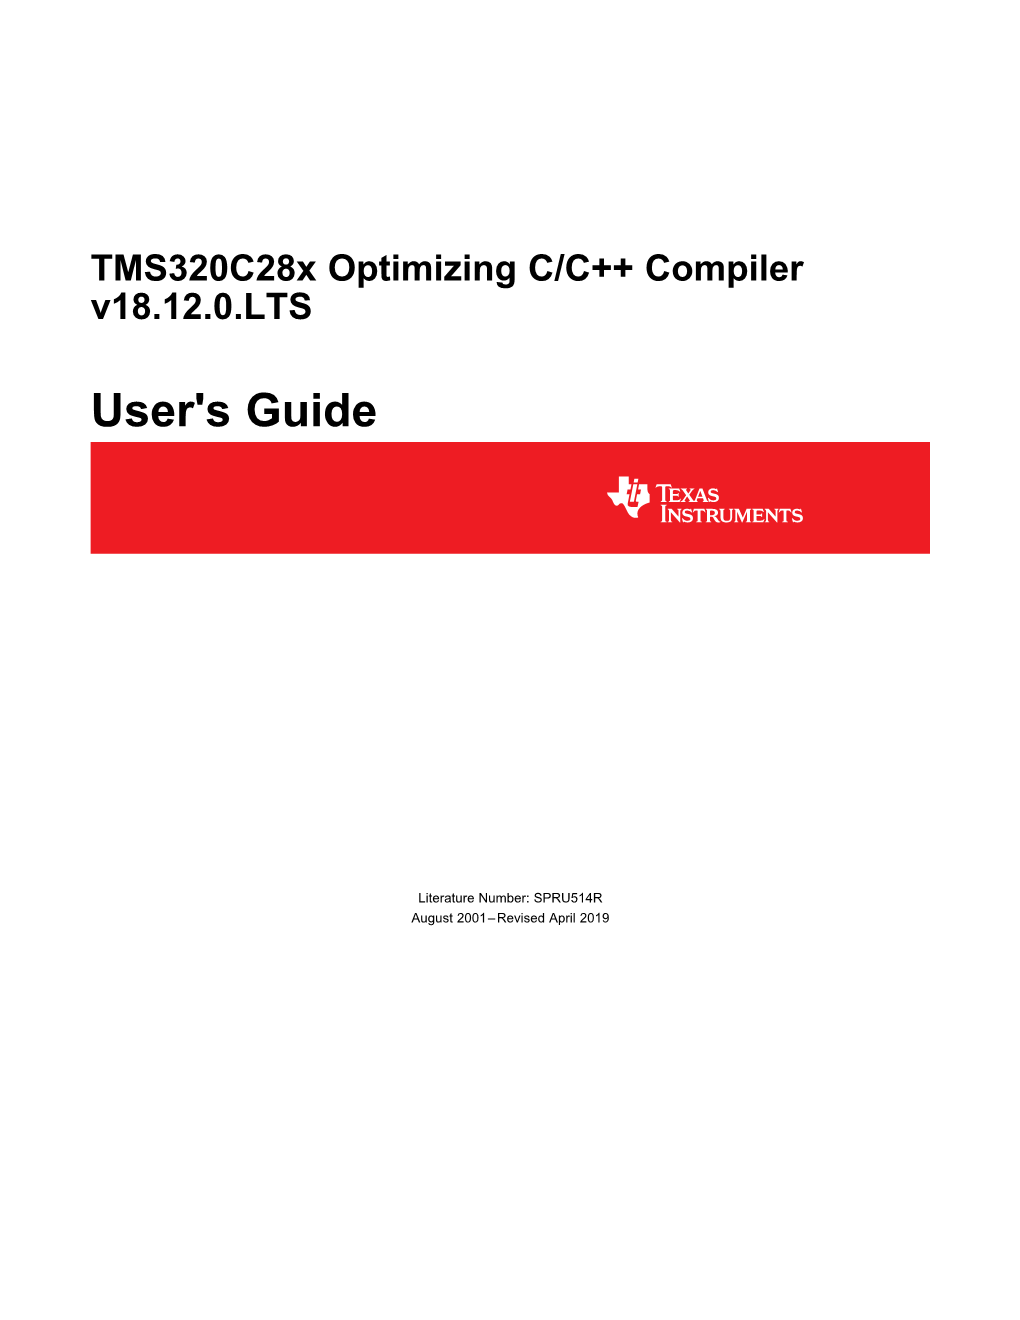 Tms320c28x Optimizing C/C++ Compiler V18.12.0.LTS User's Guide